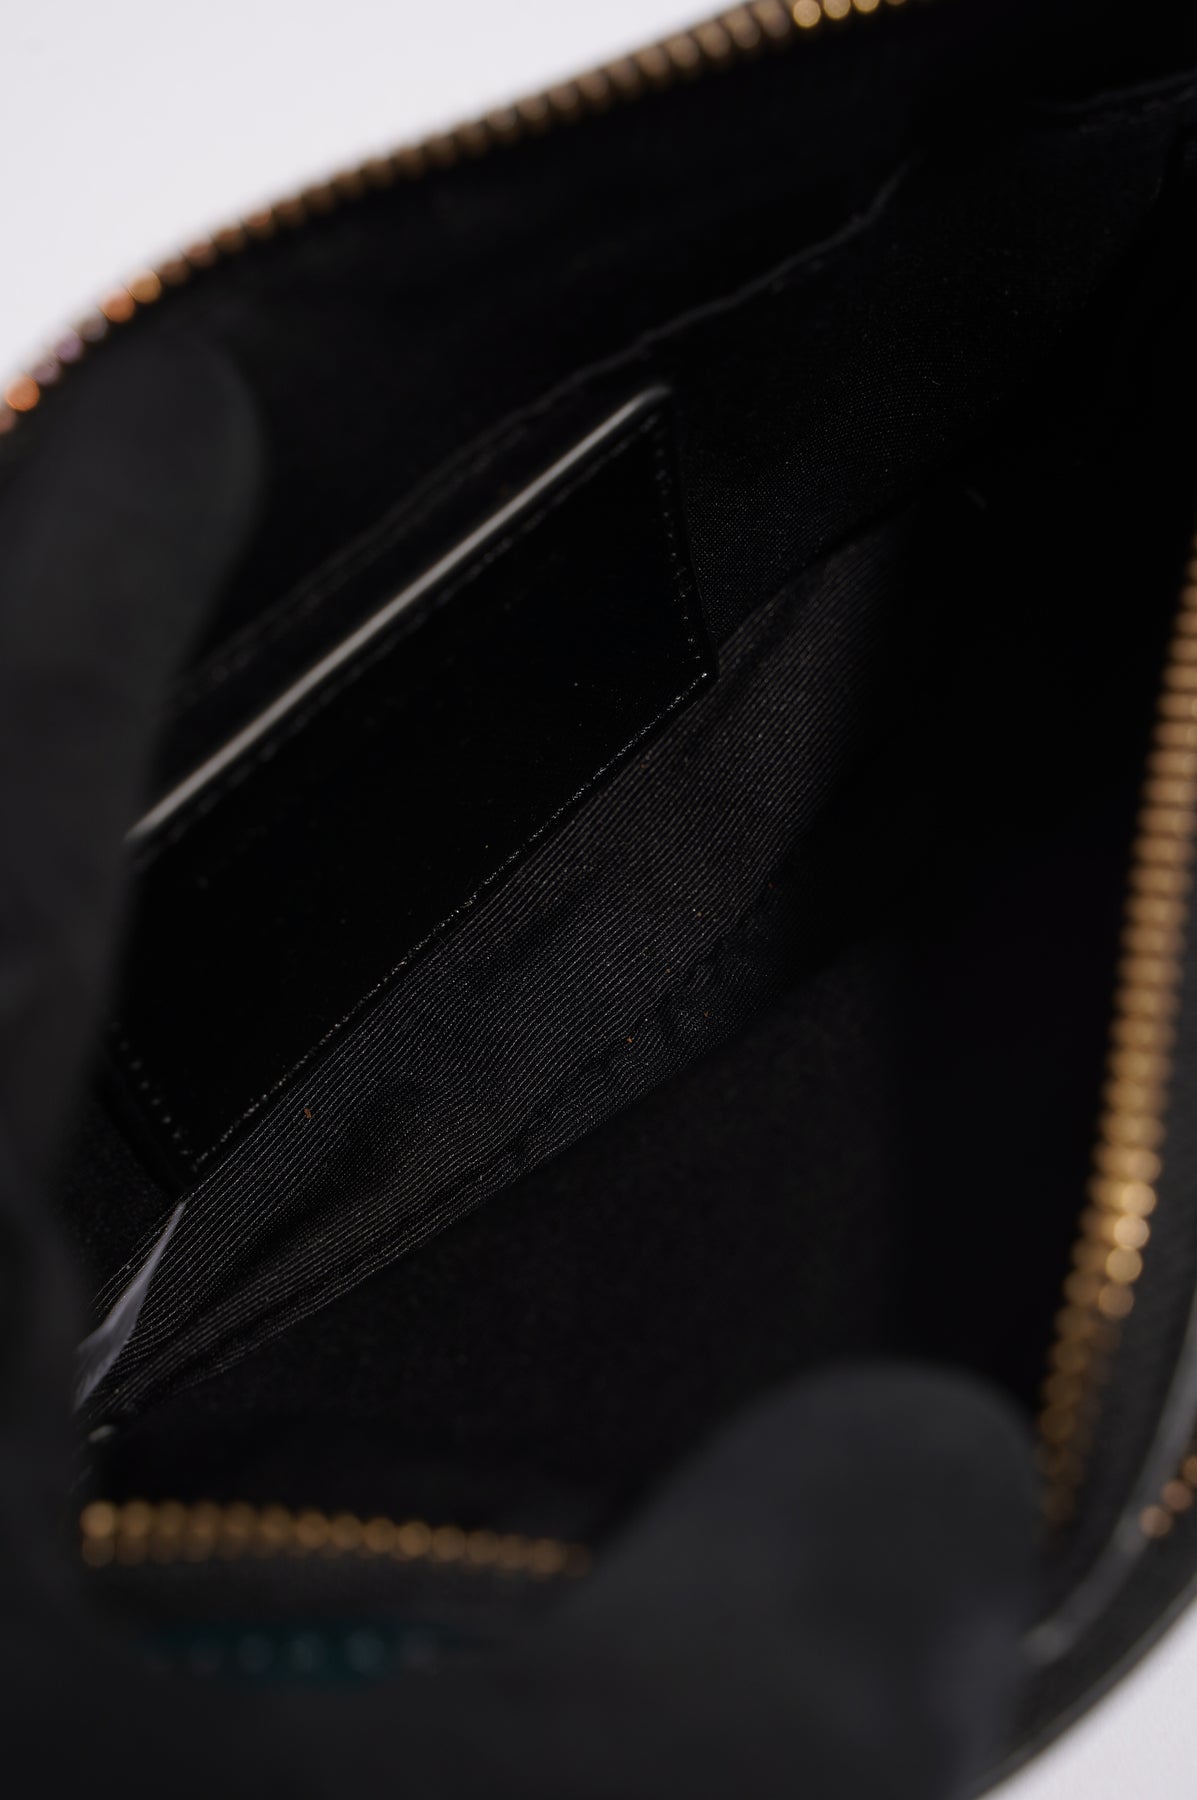 Marc Jacobs The Snapshot Camera Bag Black/Burgundy/White/Gold